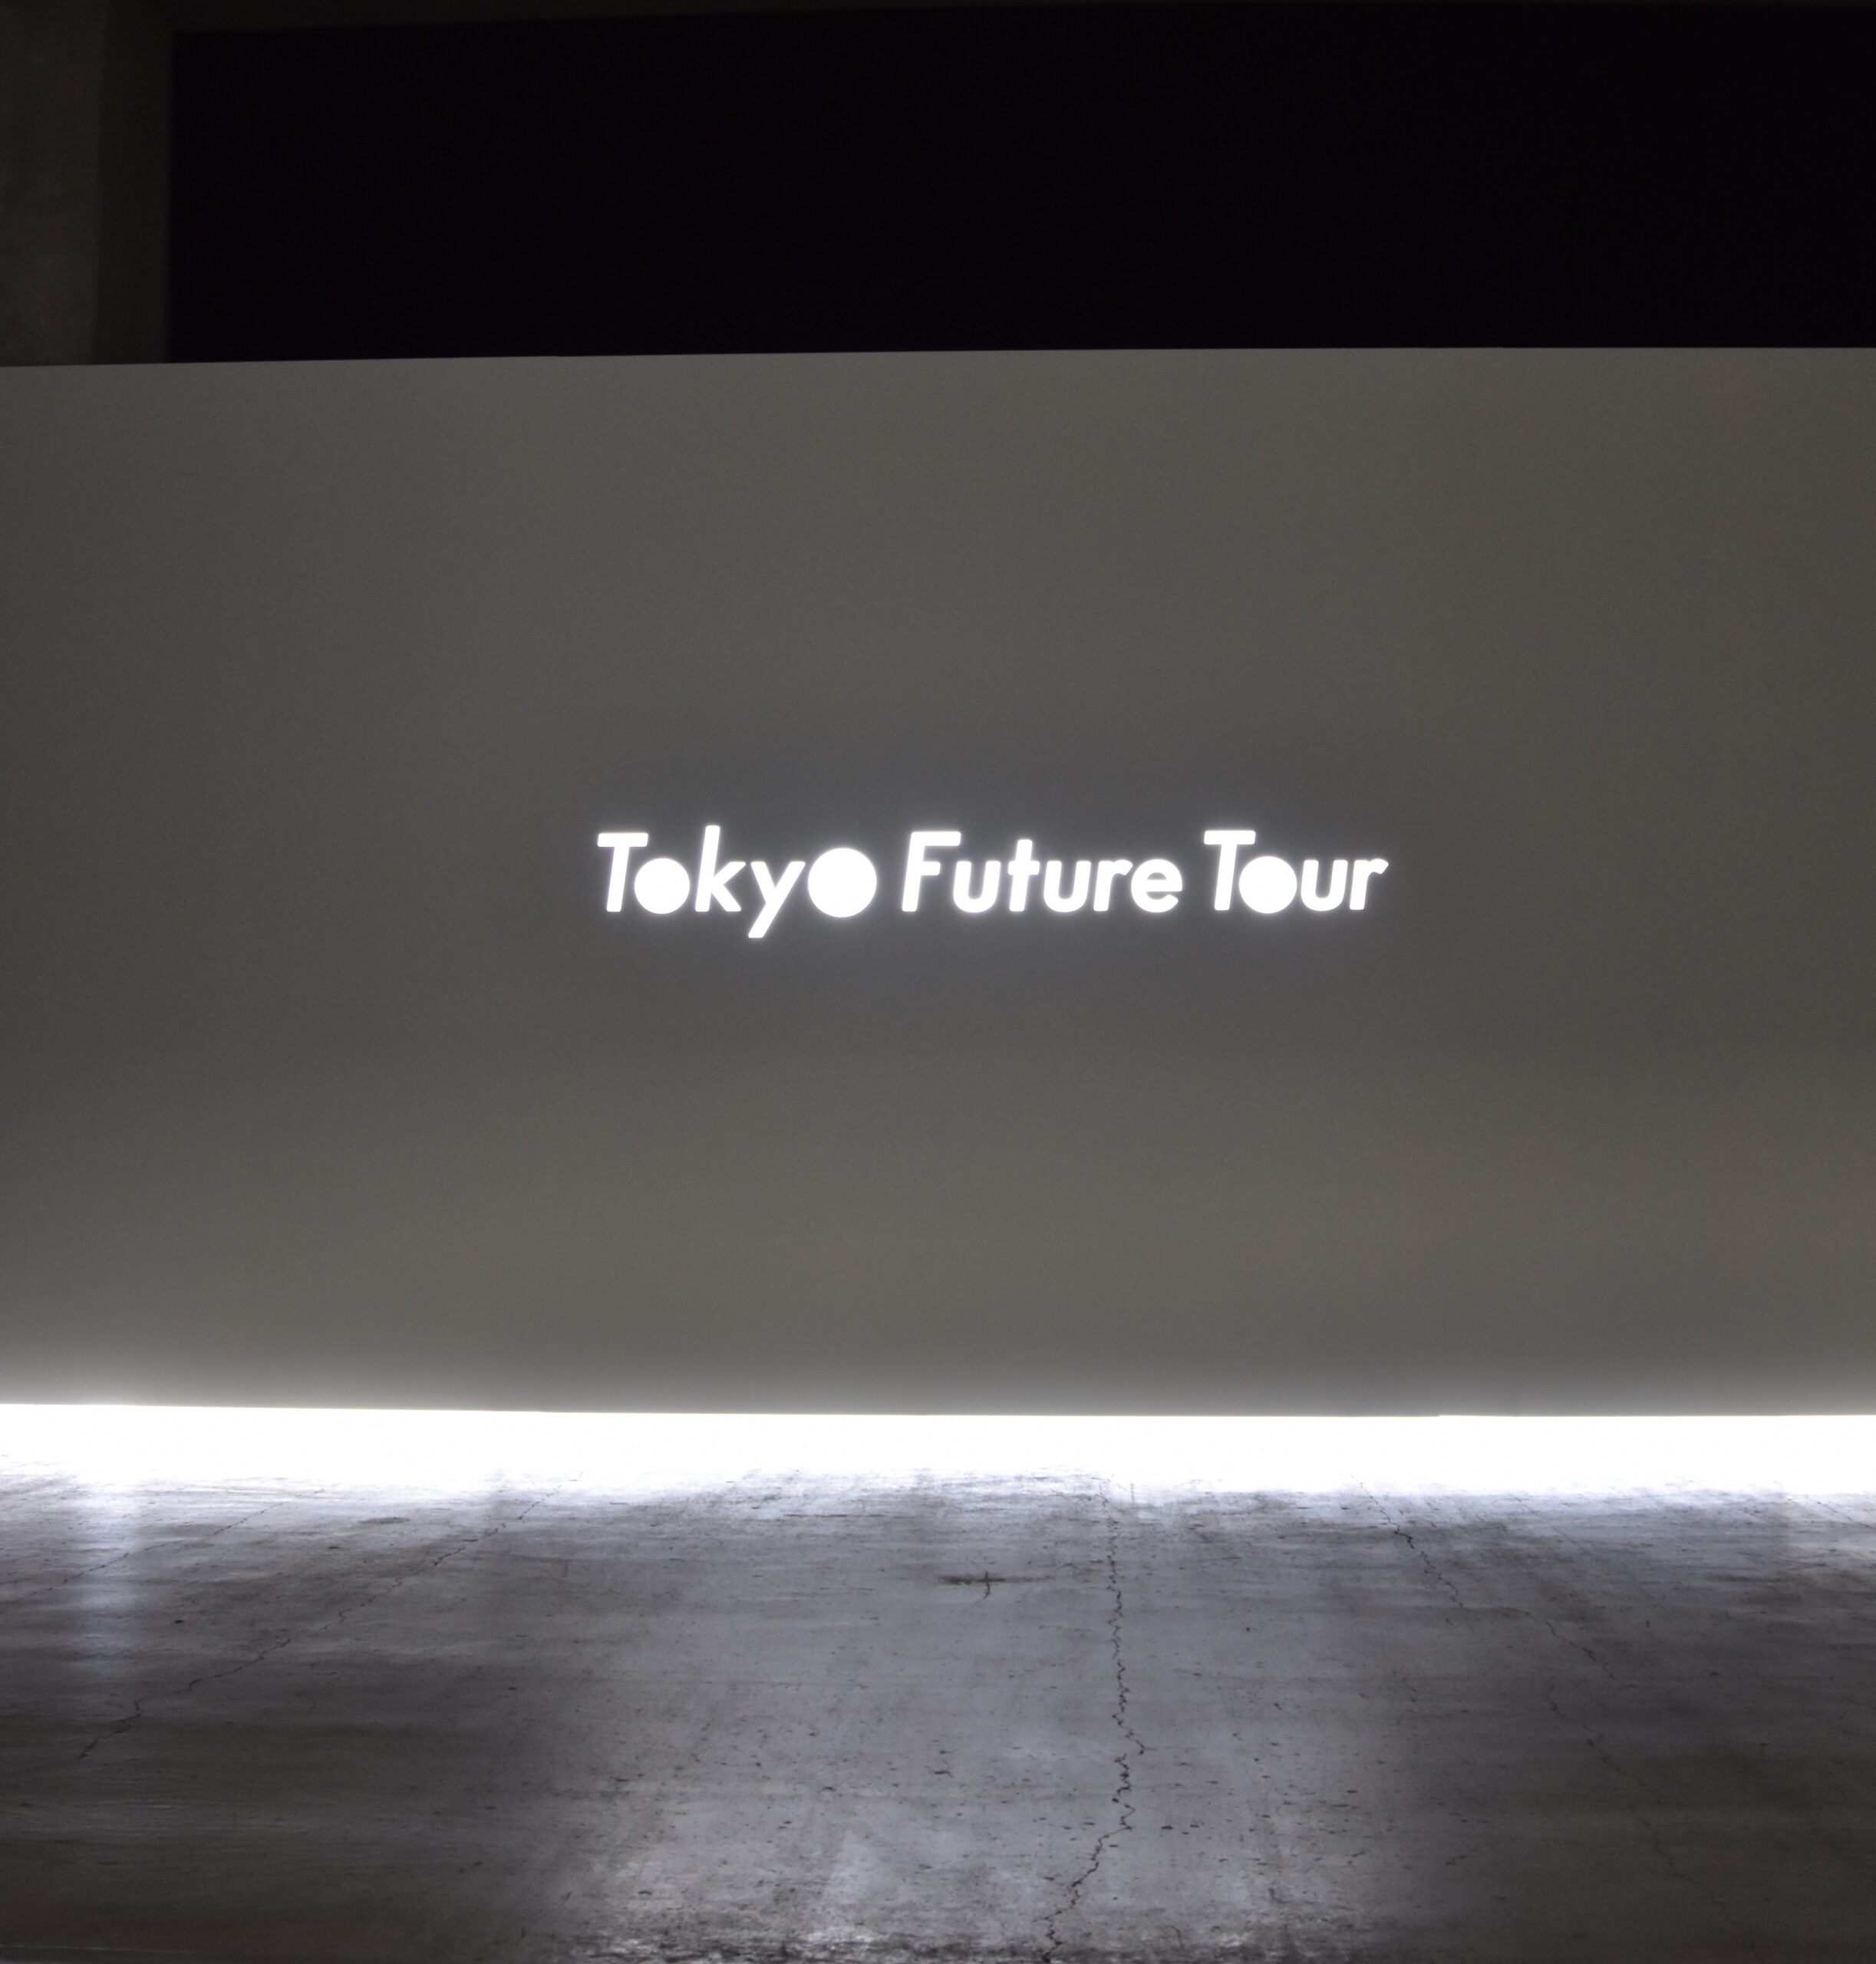 「Tokyo Future Tour」のエントランス